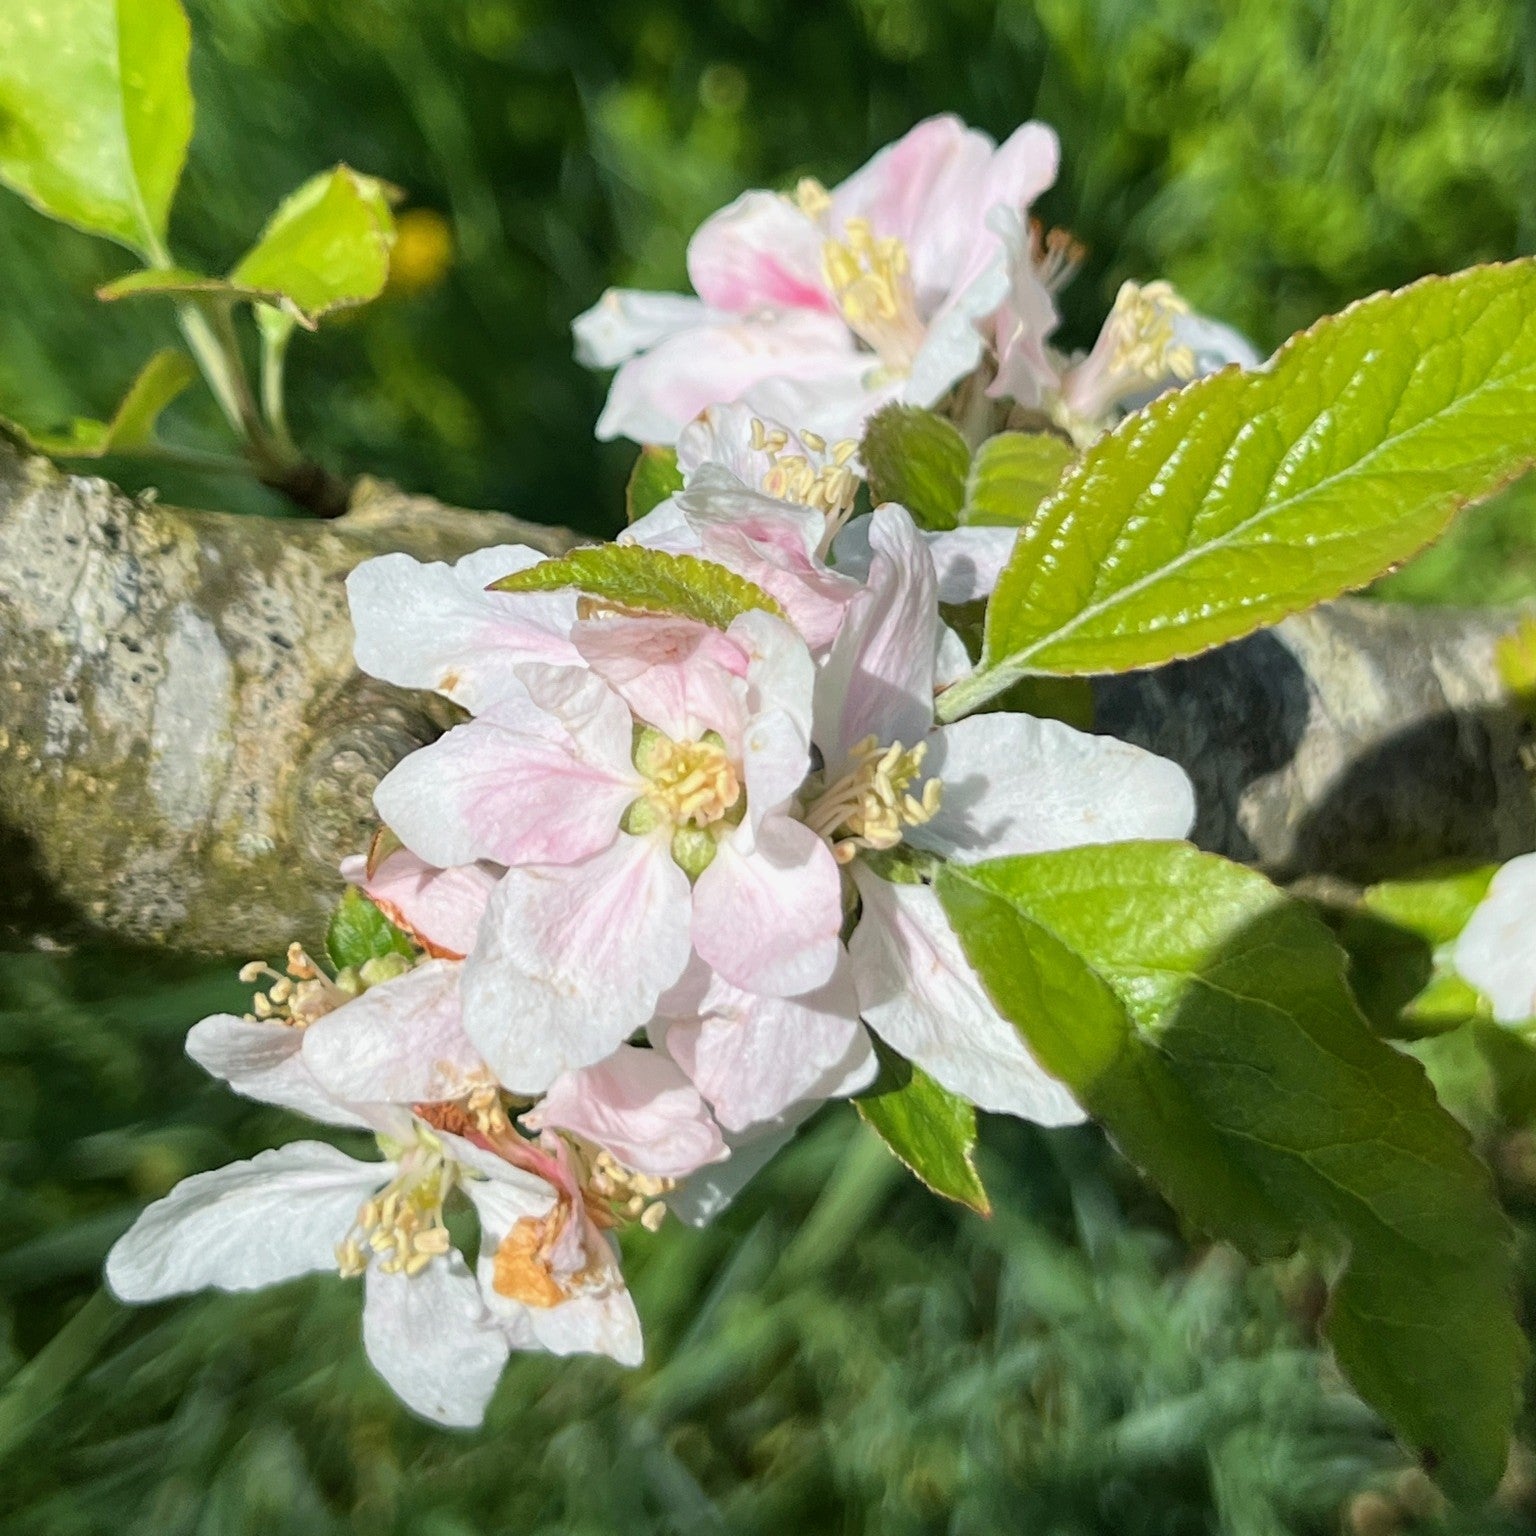 Pitmaston Russet Nonpareil apple tree blossom